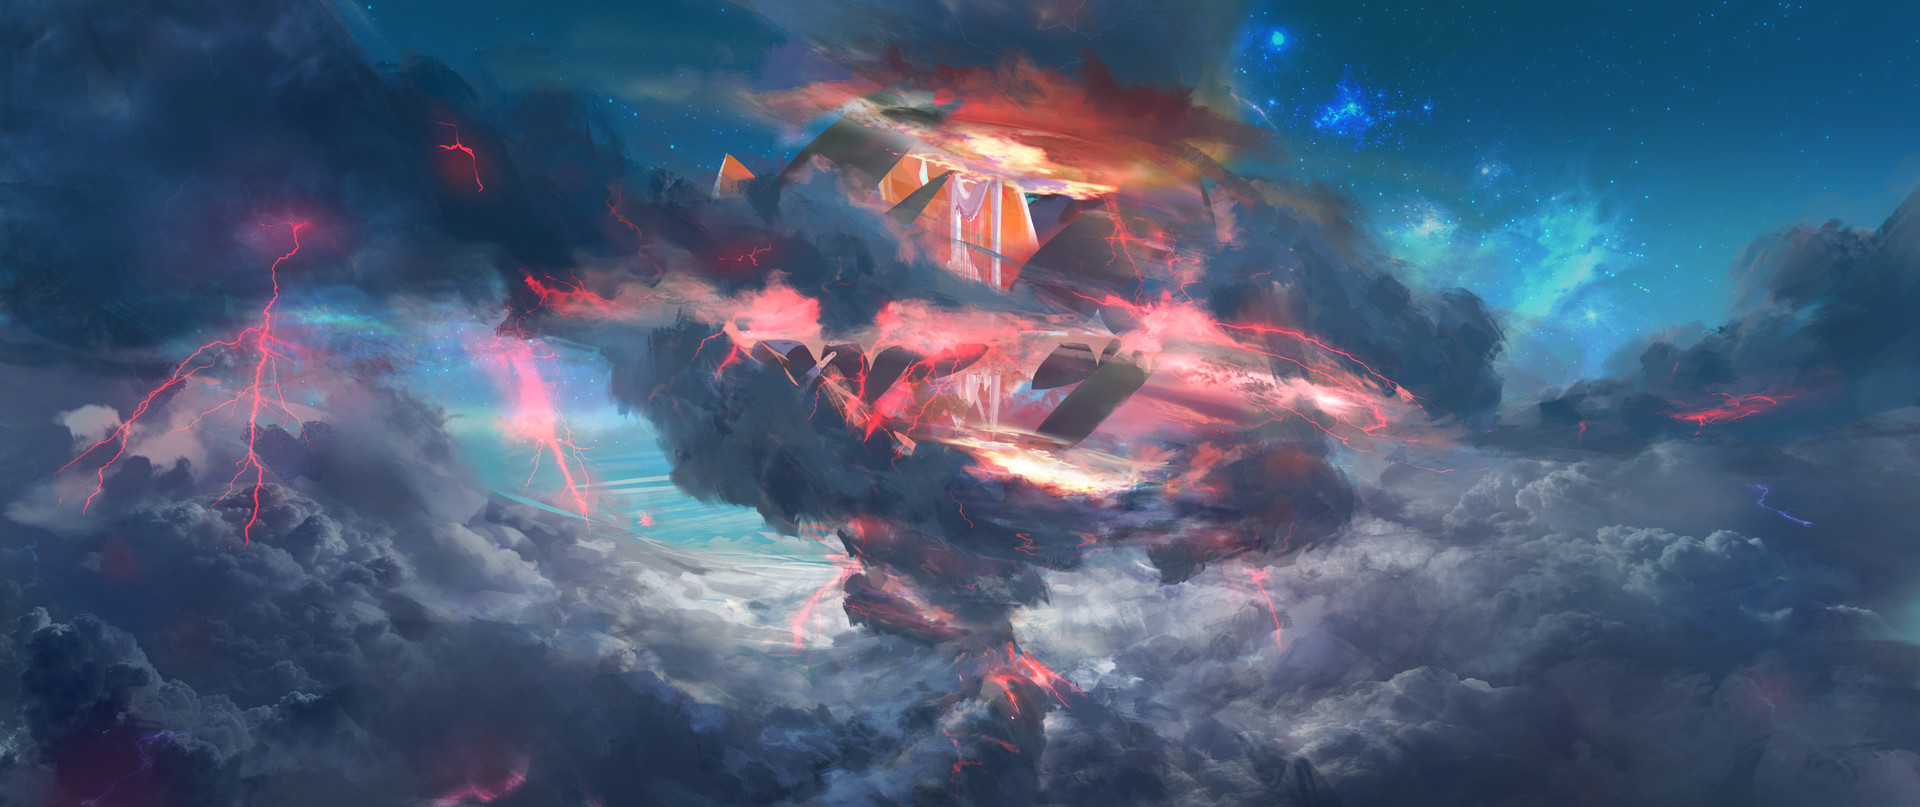 SY 37 Digital Art Landscape Fantasy Art Clouds 1920x807